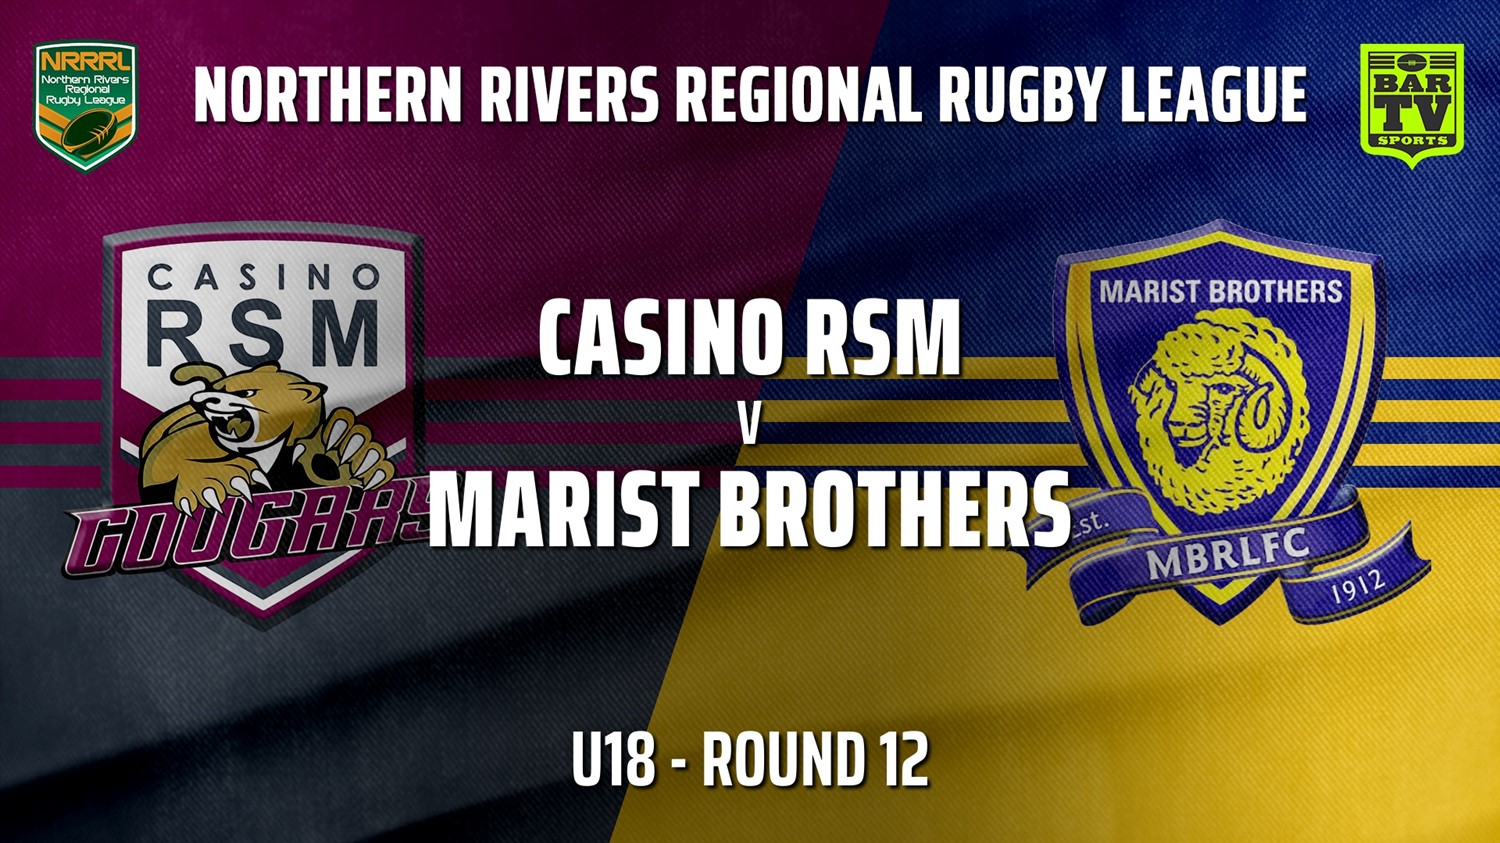 210725-Northern Rivers Round 12 - U18 - Casino RSM Cougars v Lismore Marist Brothers Rams Slate Image